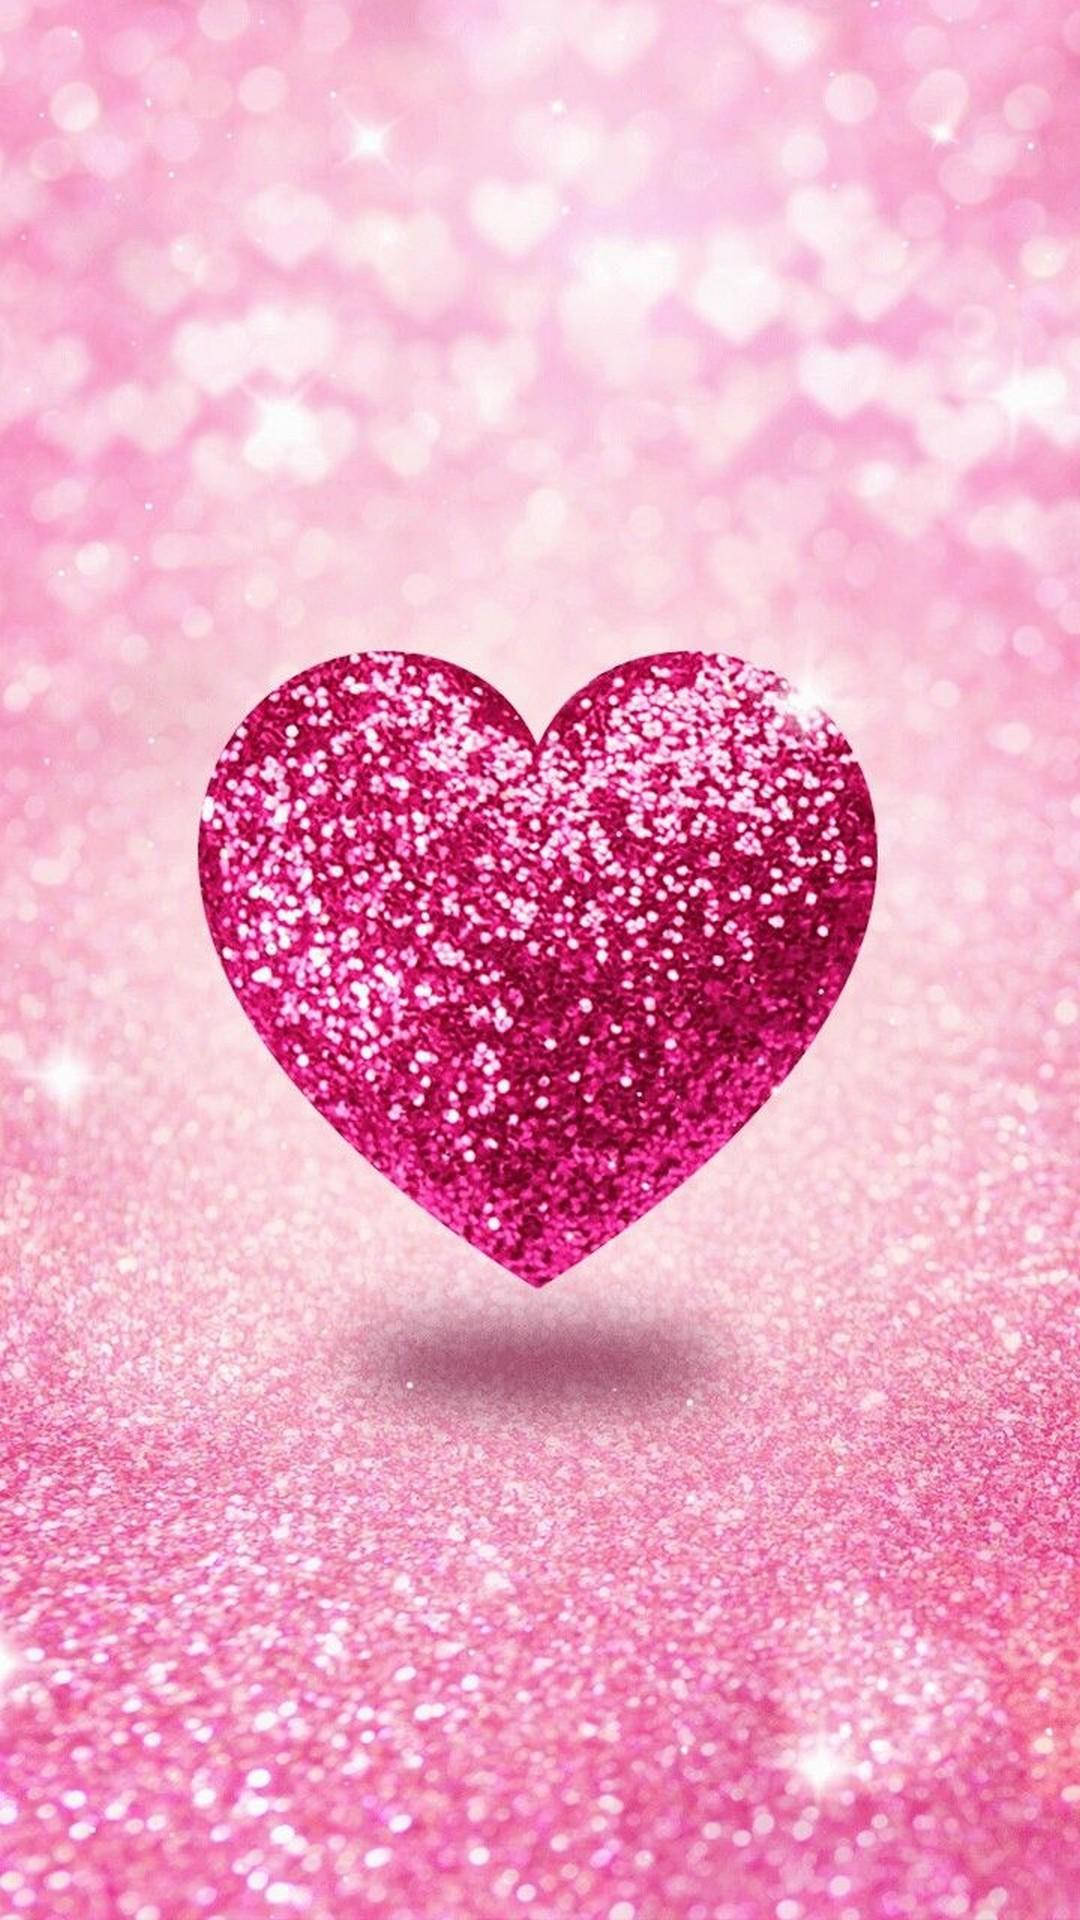 Lovely 3d Glittery Pink Heart Love Iphone Wallpaper